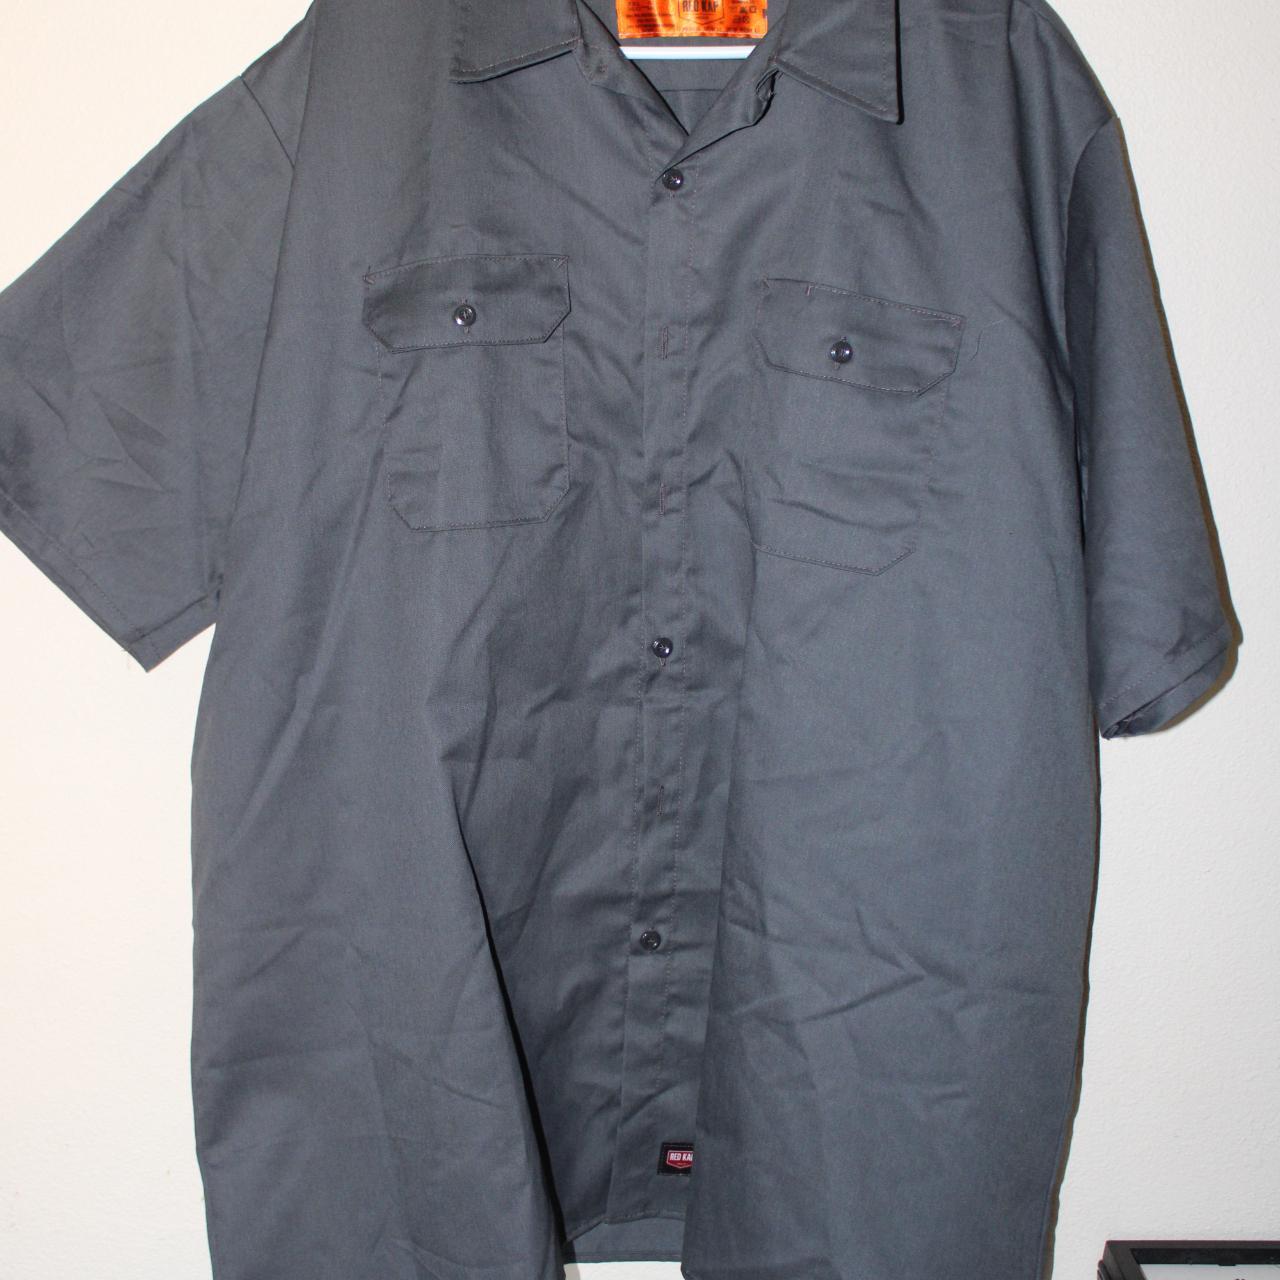 A work shirt with pocket flaps and left pocket... - Depop